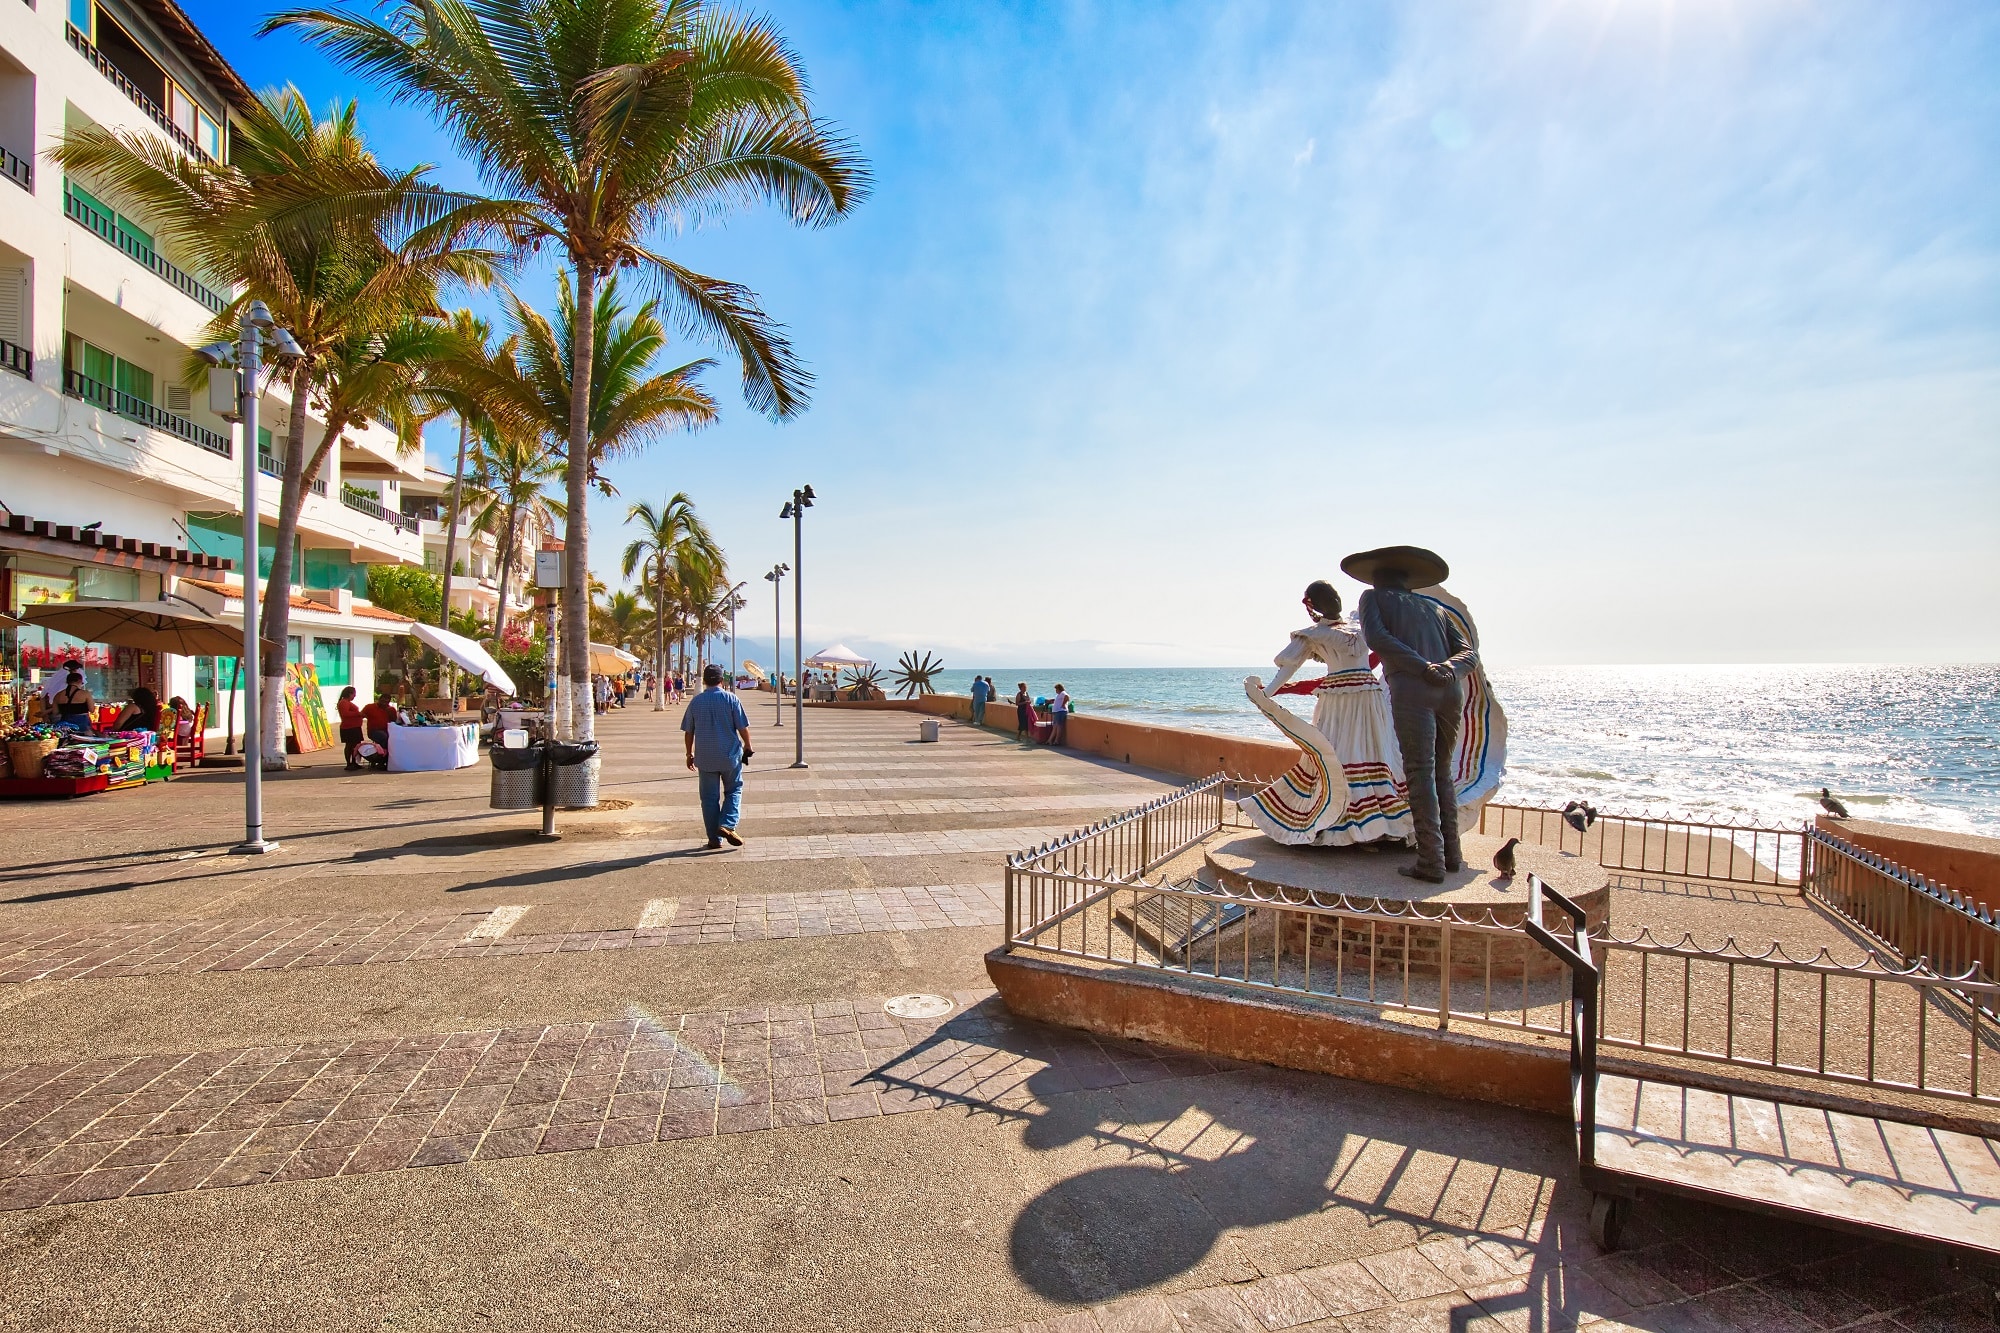 sculptures alone the Malecon boardwalk in Puerto Vallarta